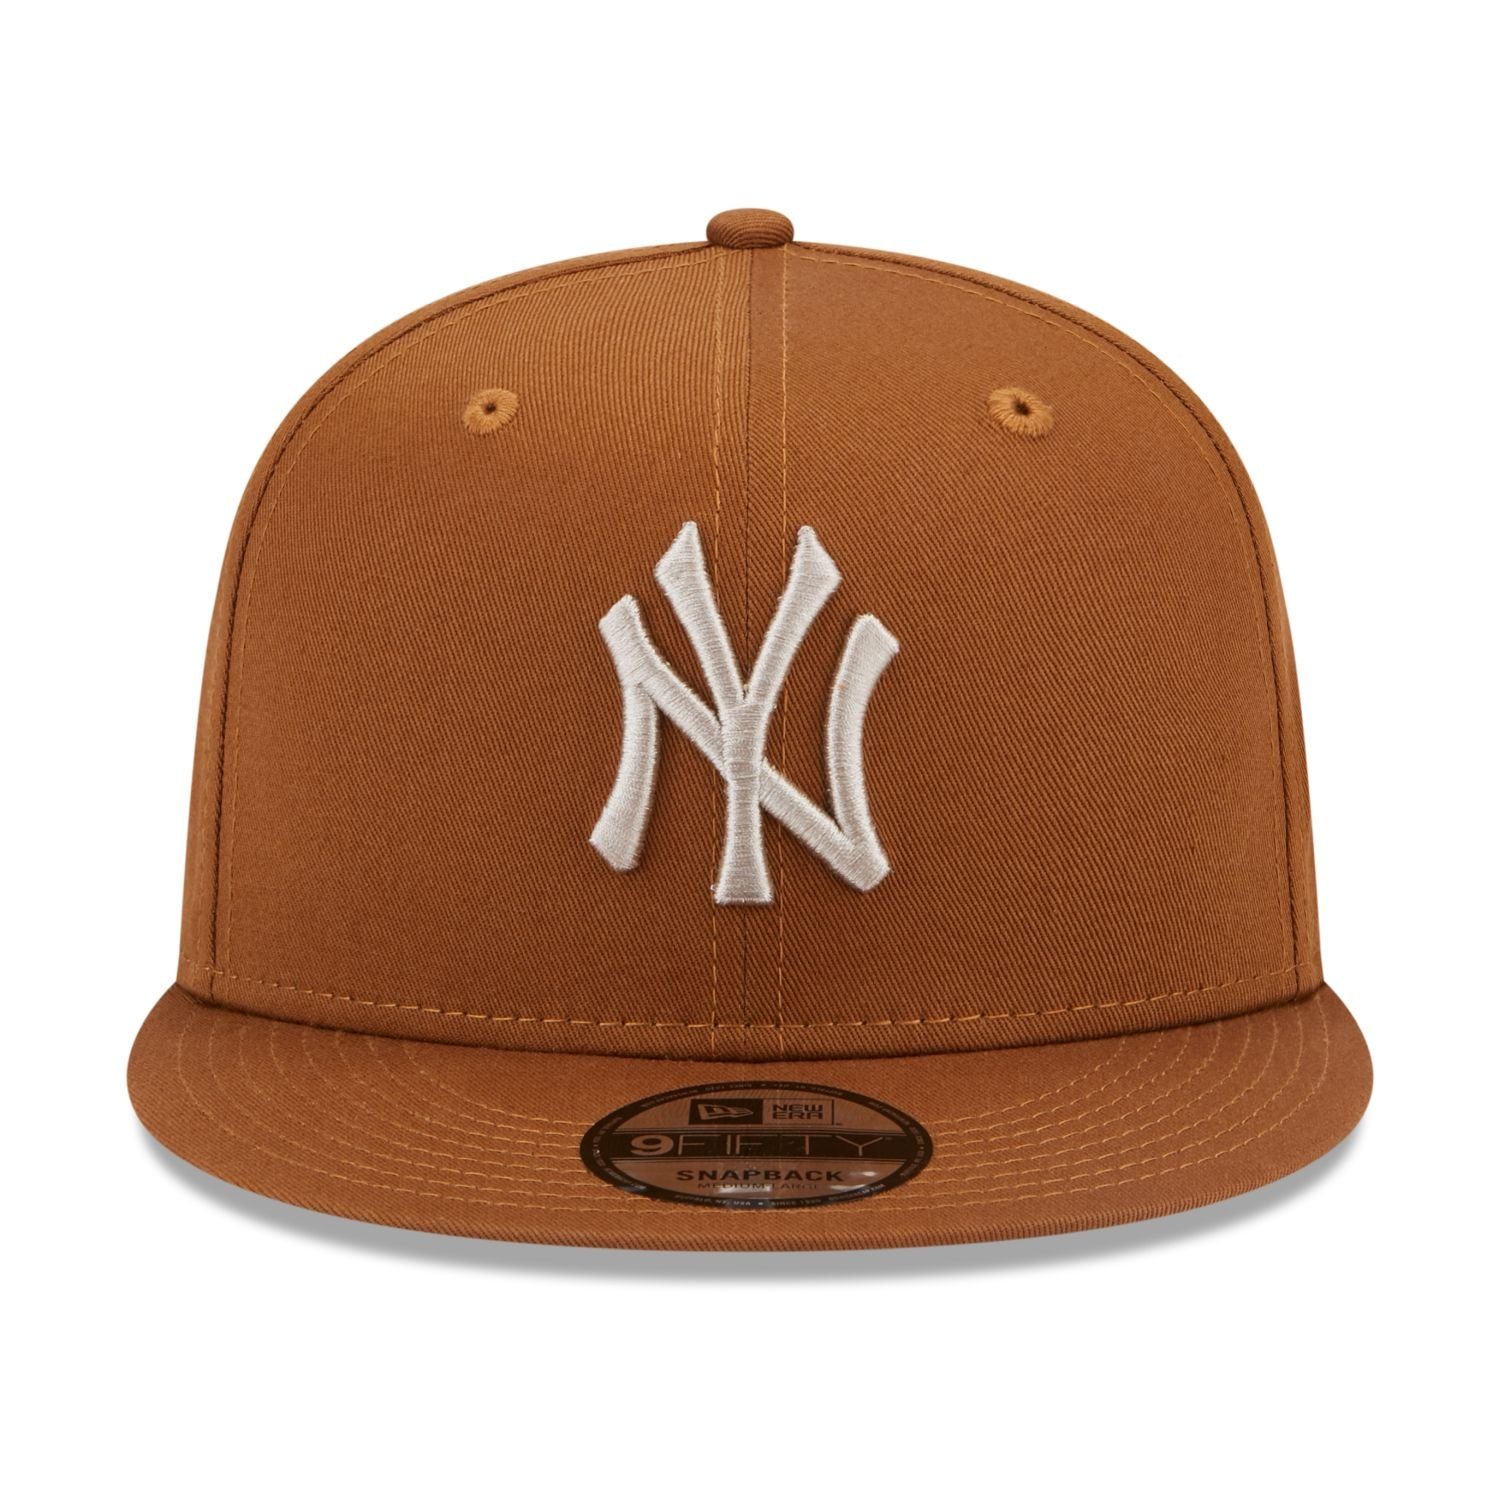 New 9Fifty Era peanut York Cap New Yankees Snapback